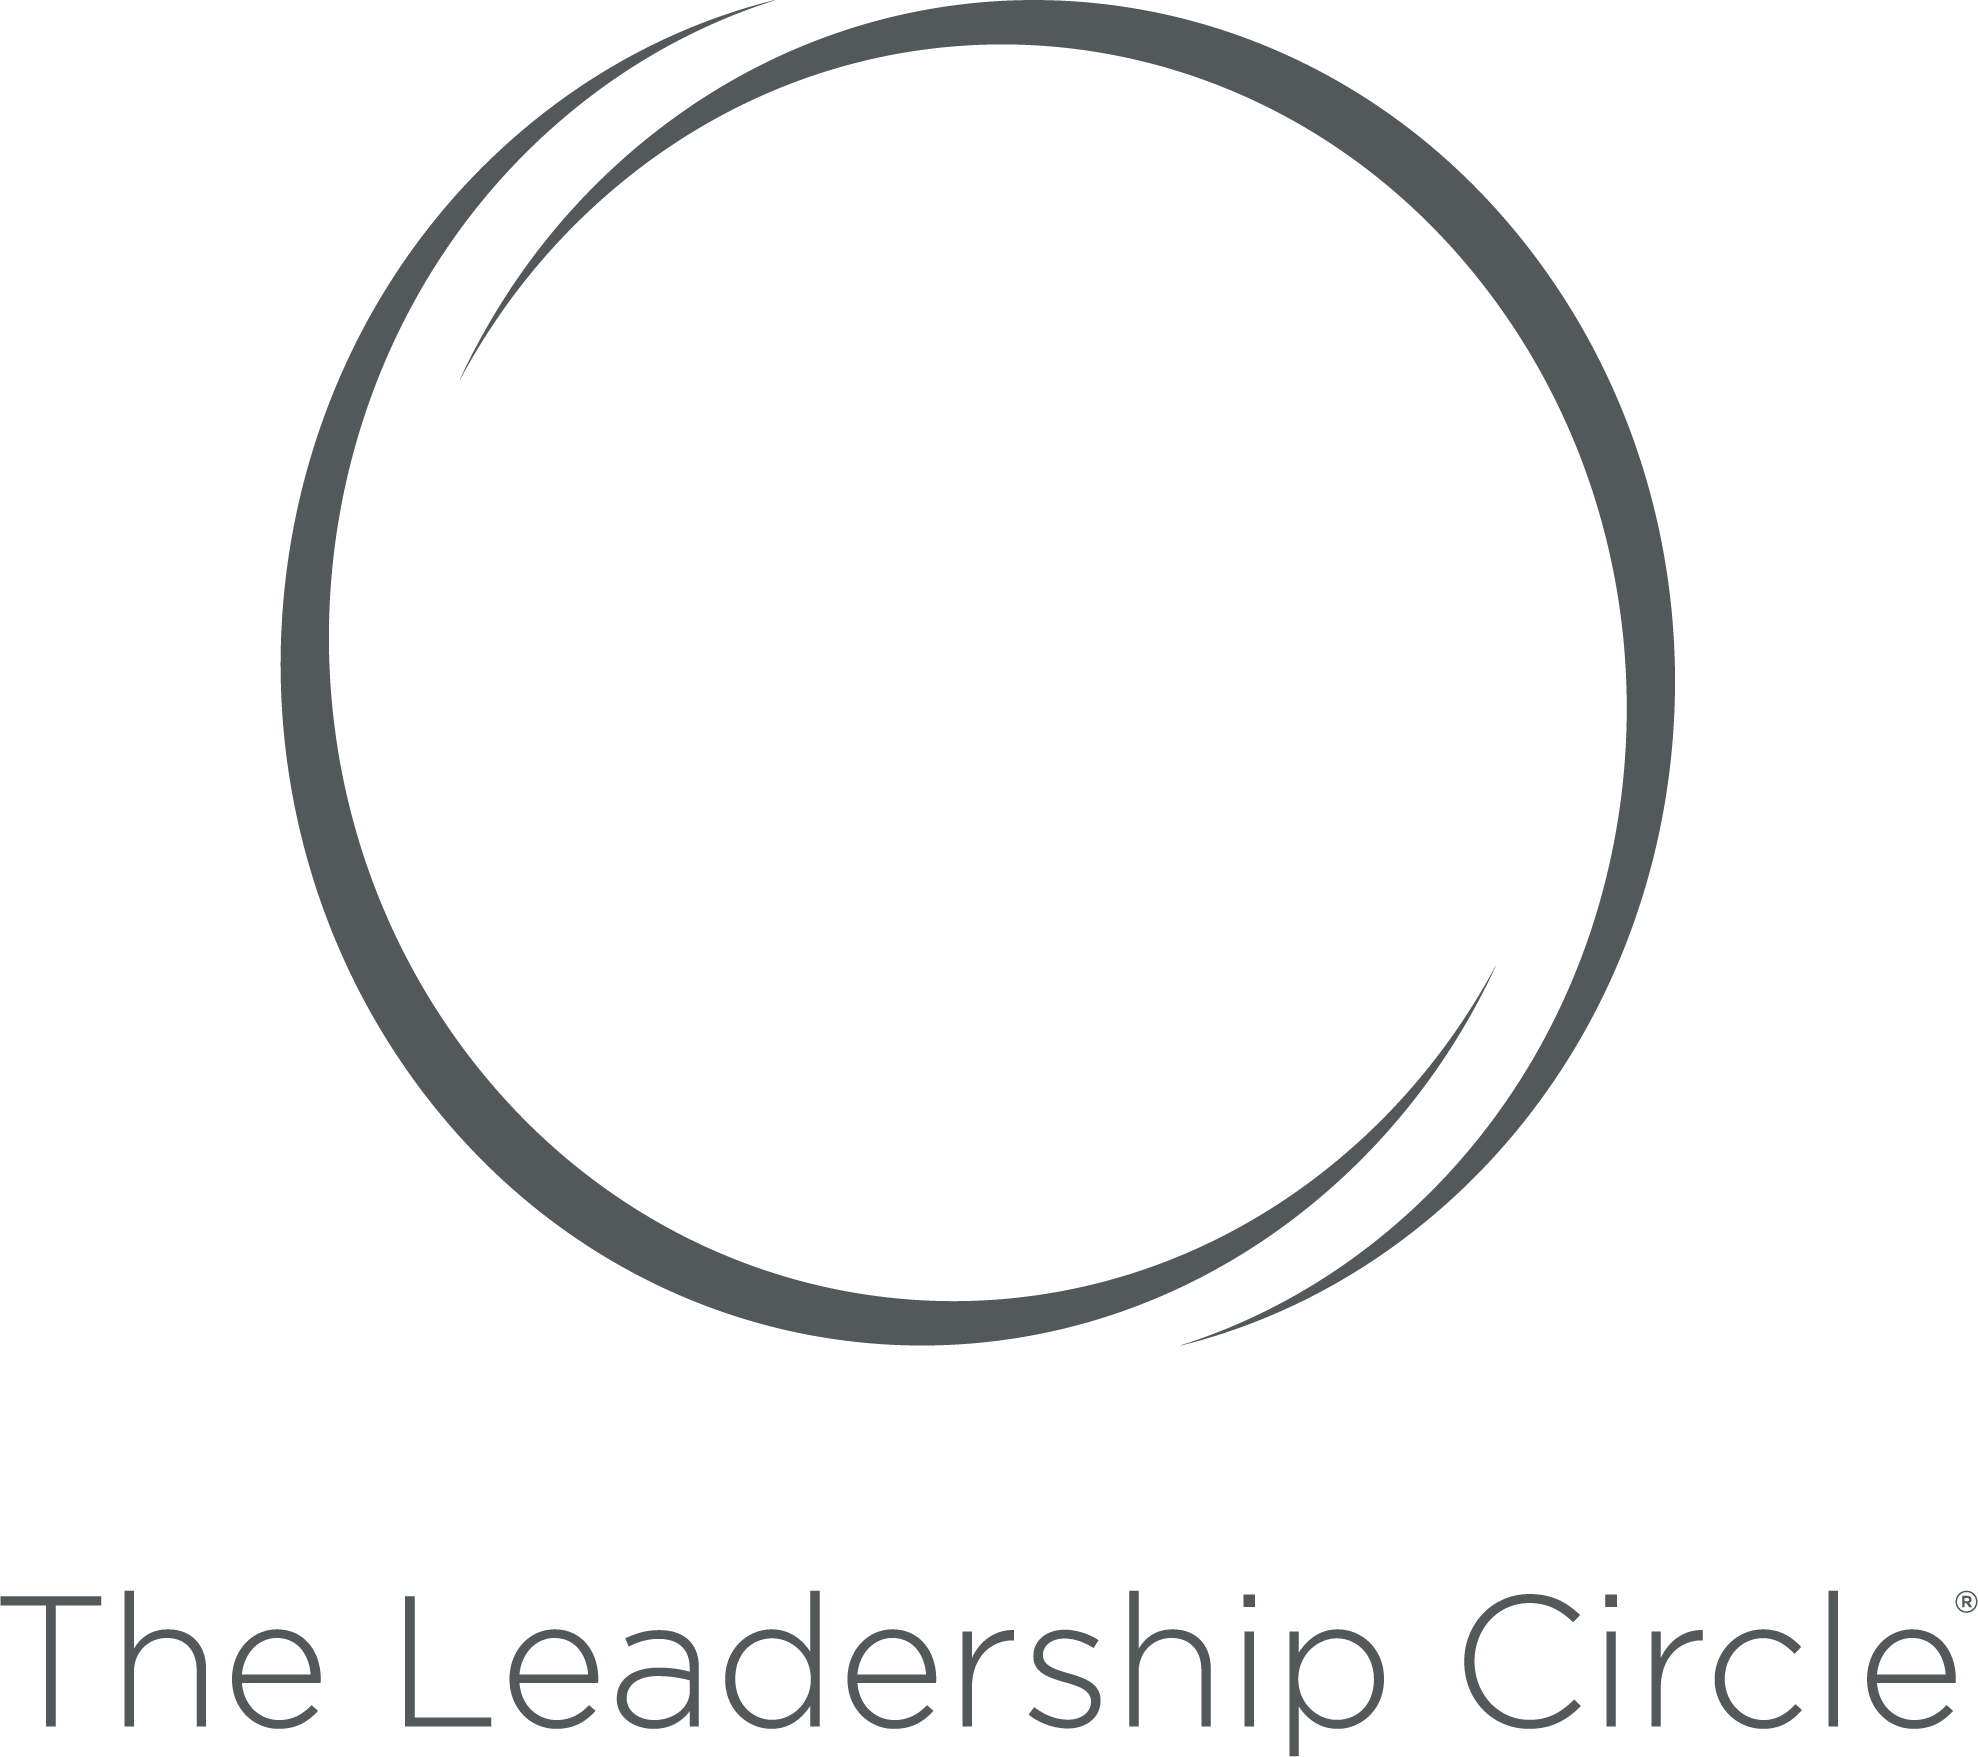 All Circle Logo - The Keys to Effective Leadership - The Leadership Circle